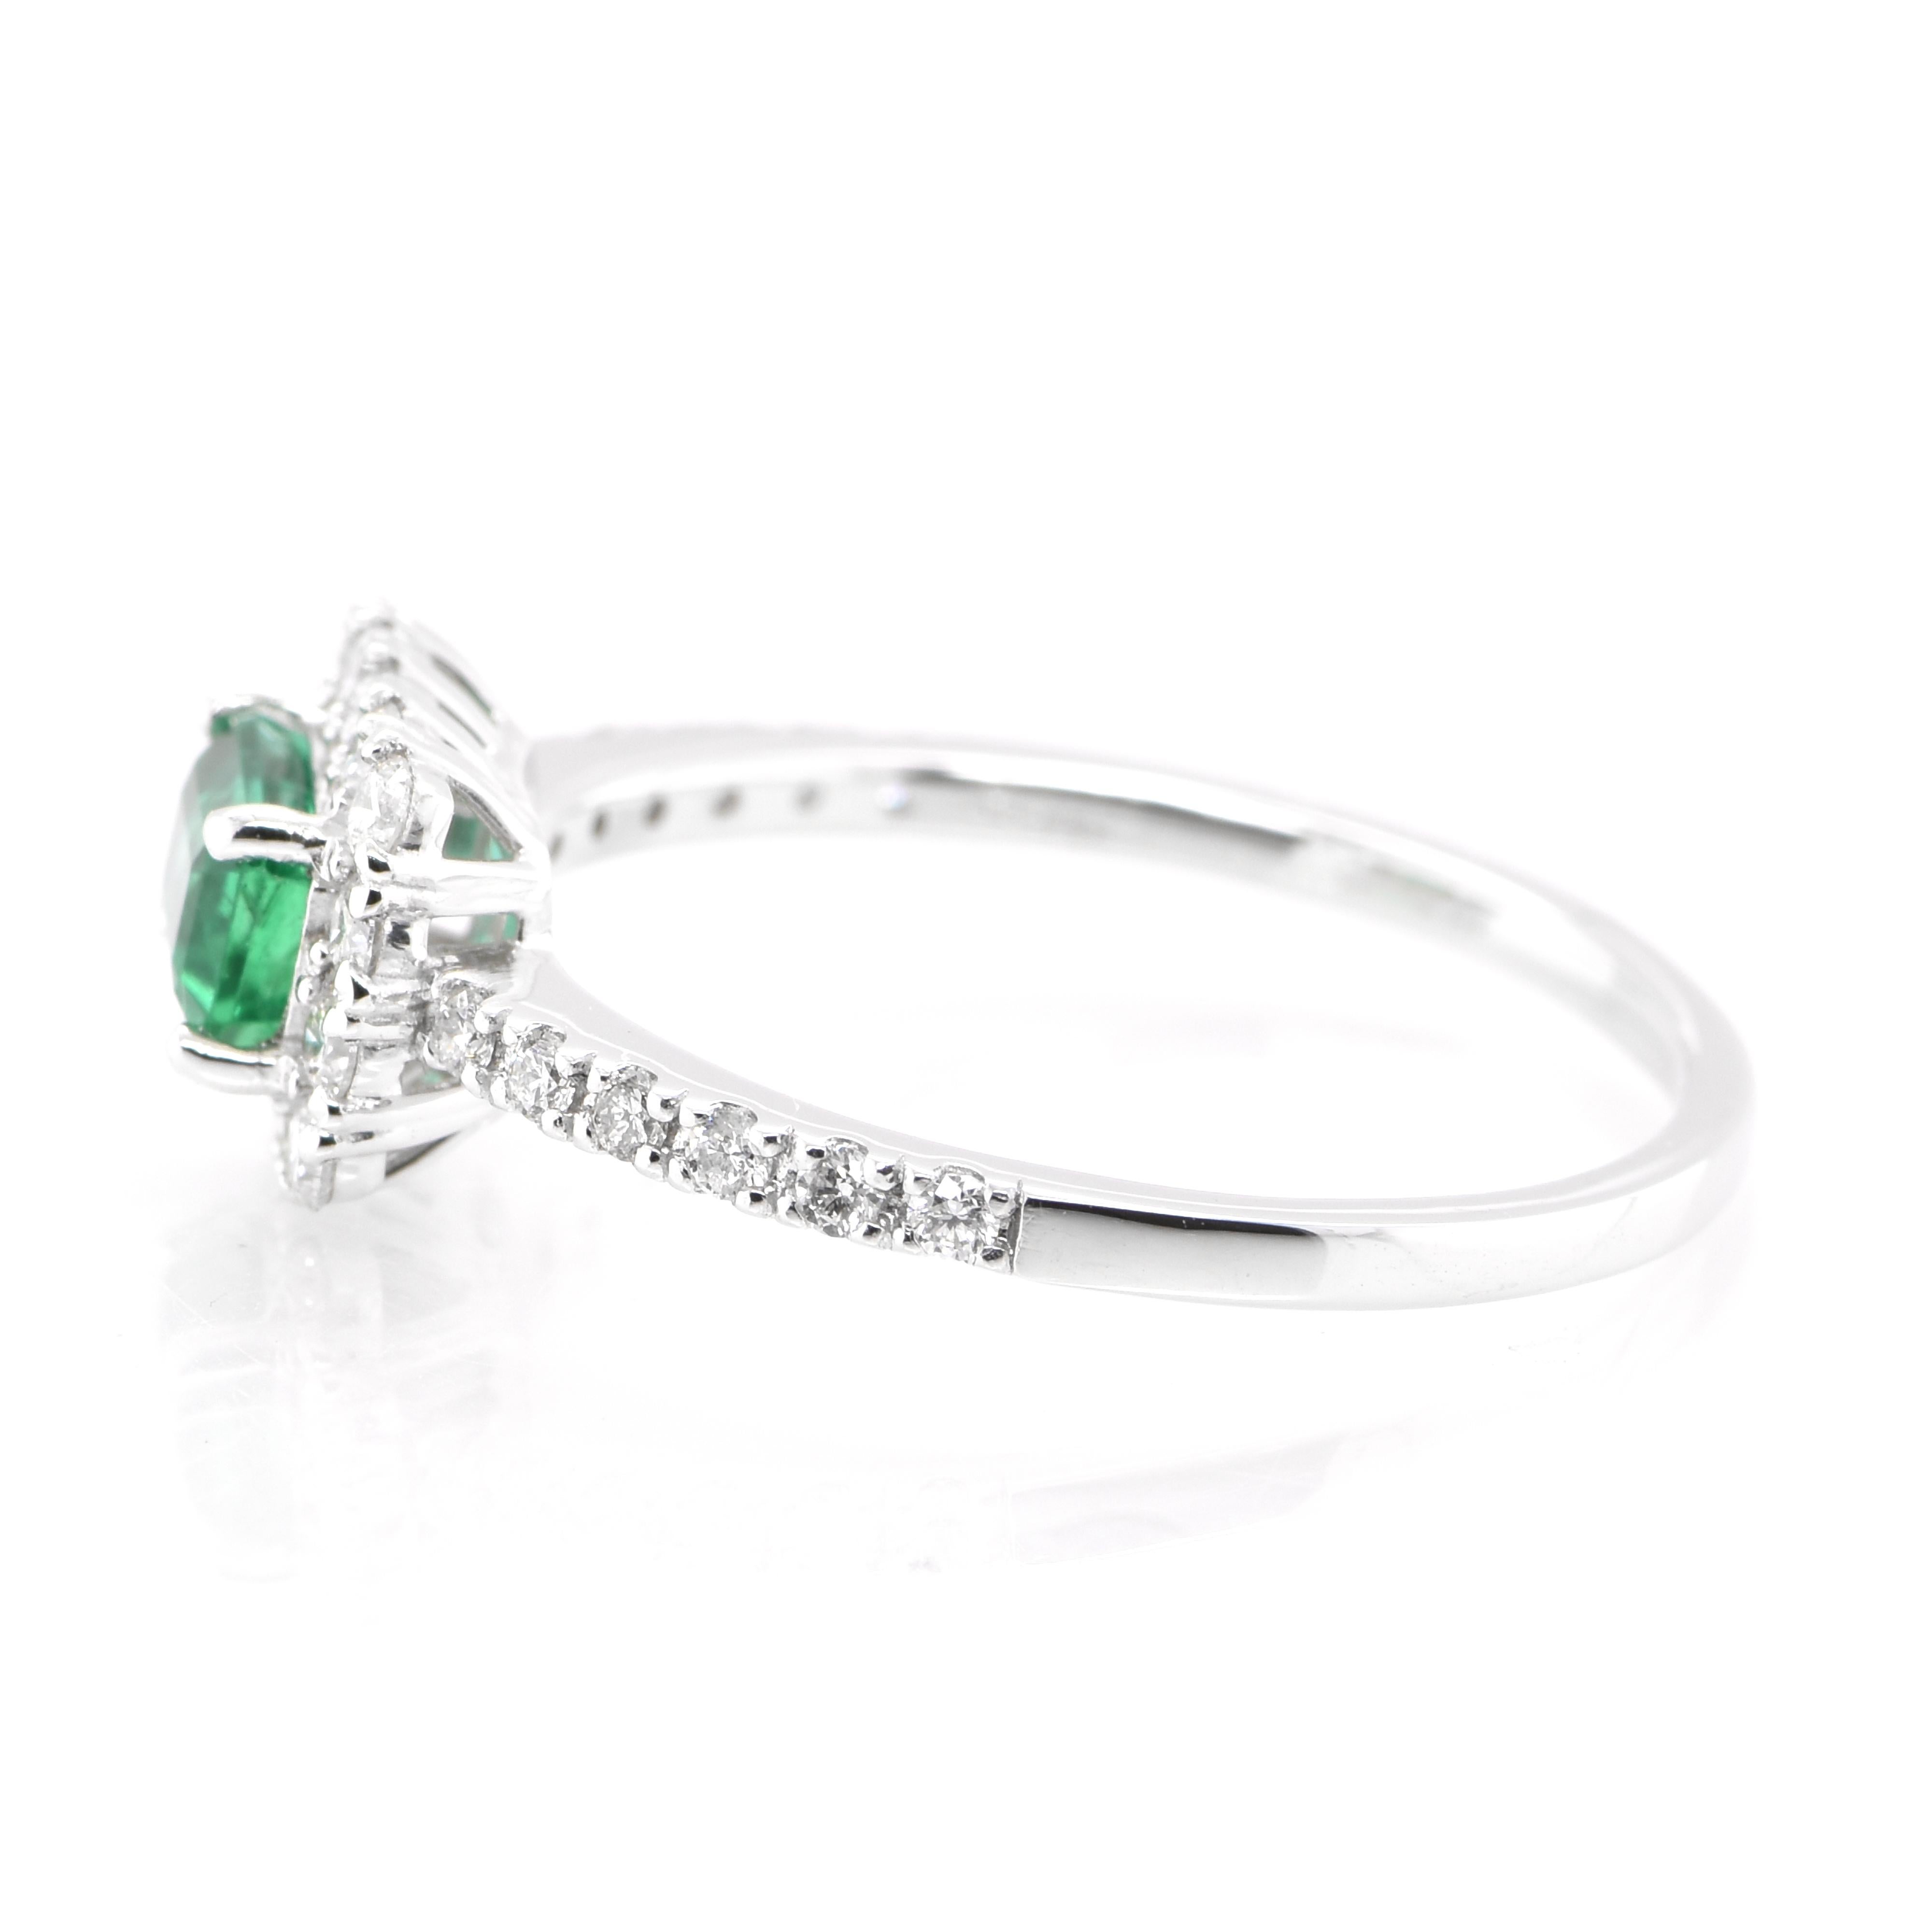 Emerald Cut 0.52 Carat Natural Emerald and Diamond Engagement Ring Set in Platinum